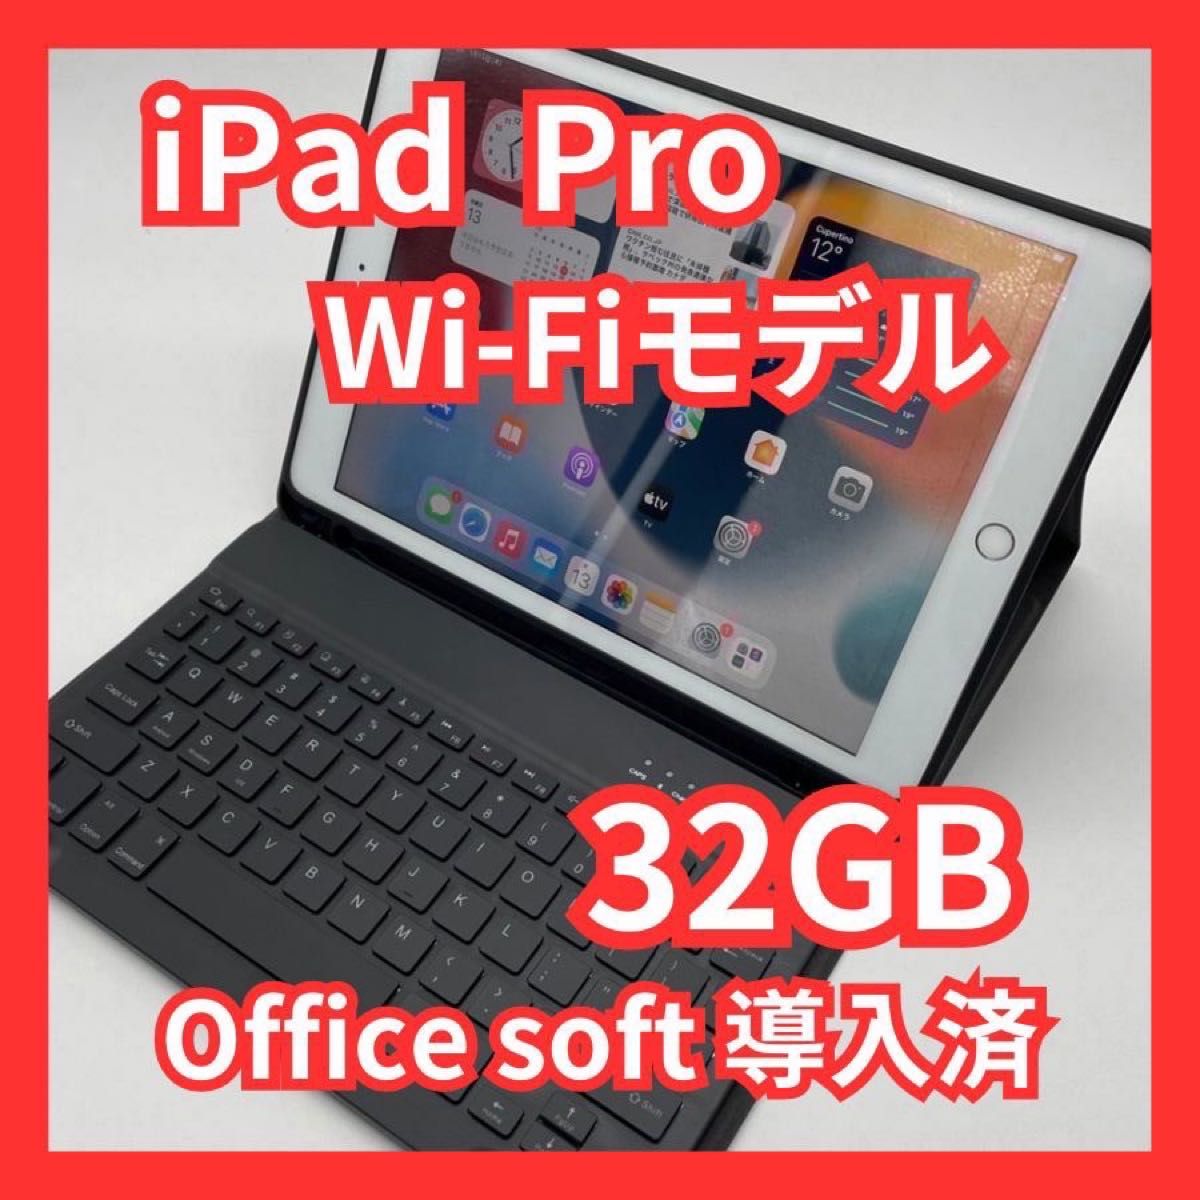 iPad Pro 9.7inch 32GB Wi-Fiモデル Office導入